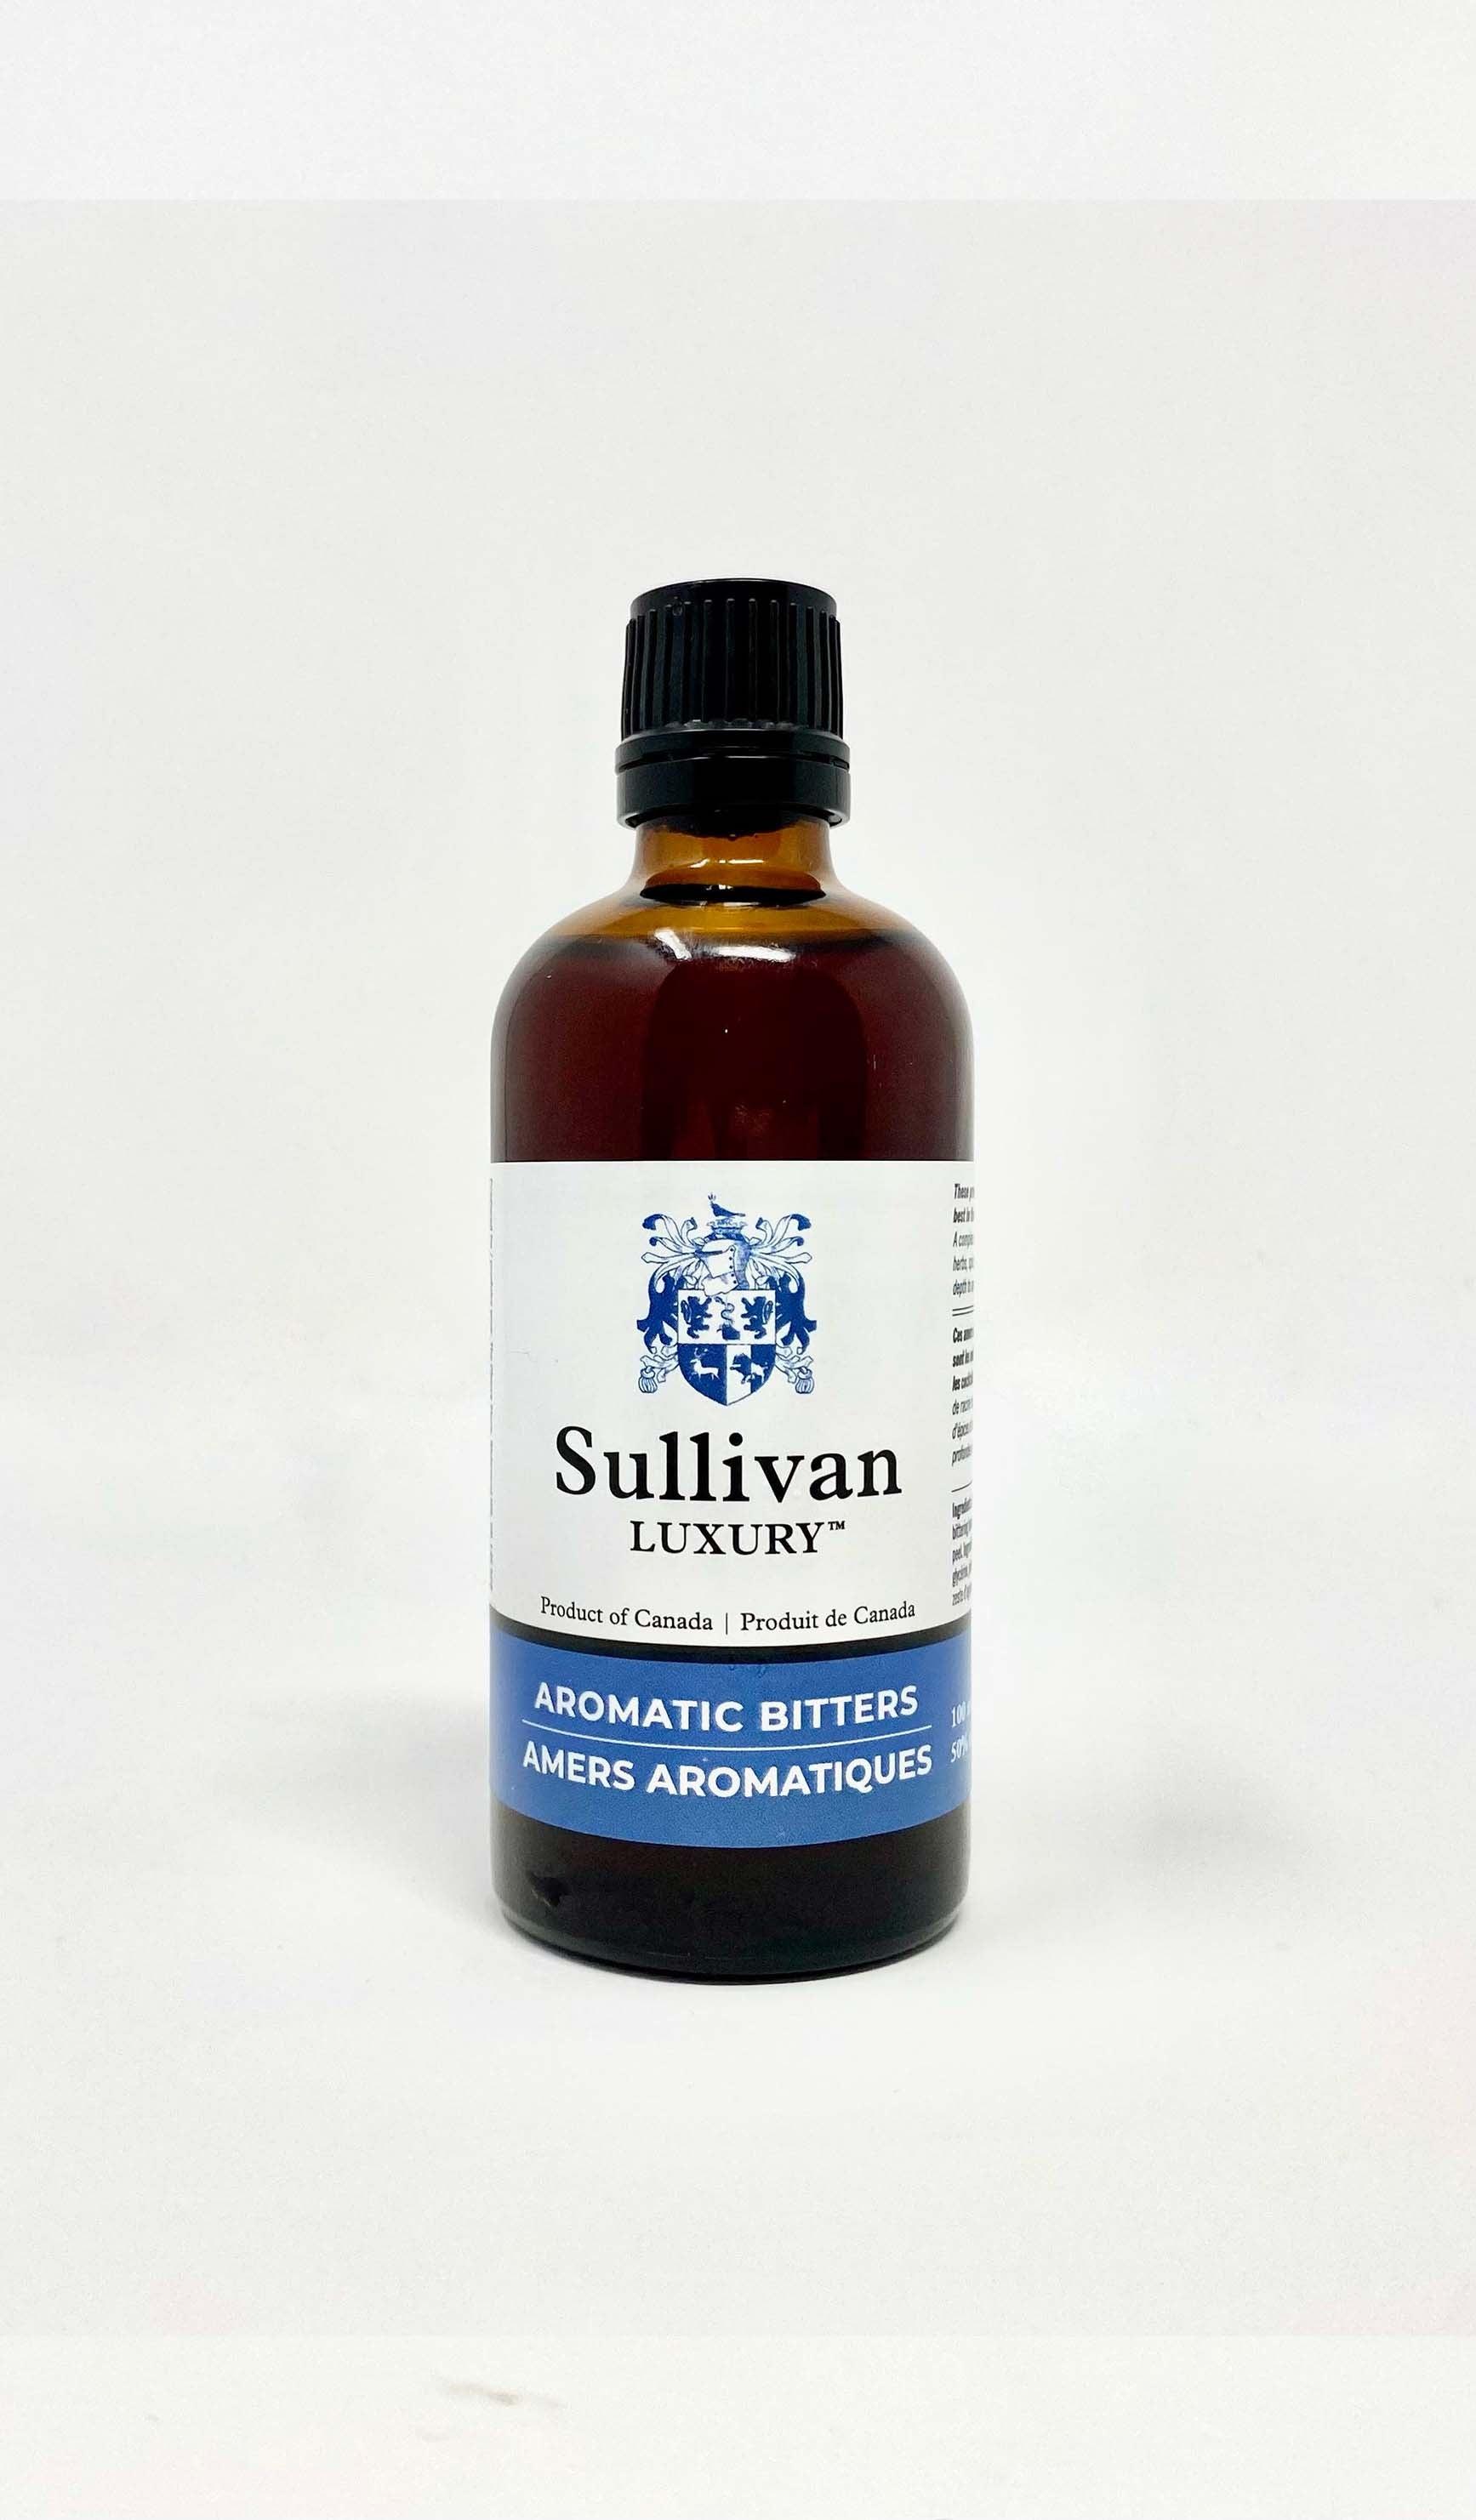 Copy of Sullivan Luxury Ginger Bitters - Image #1